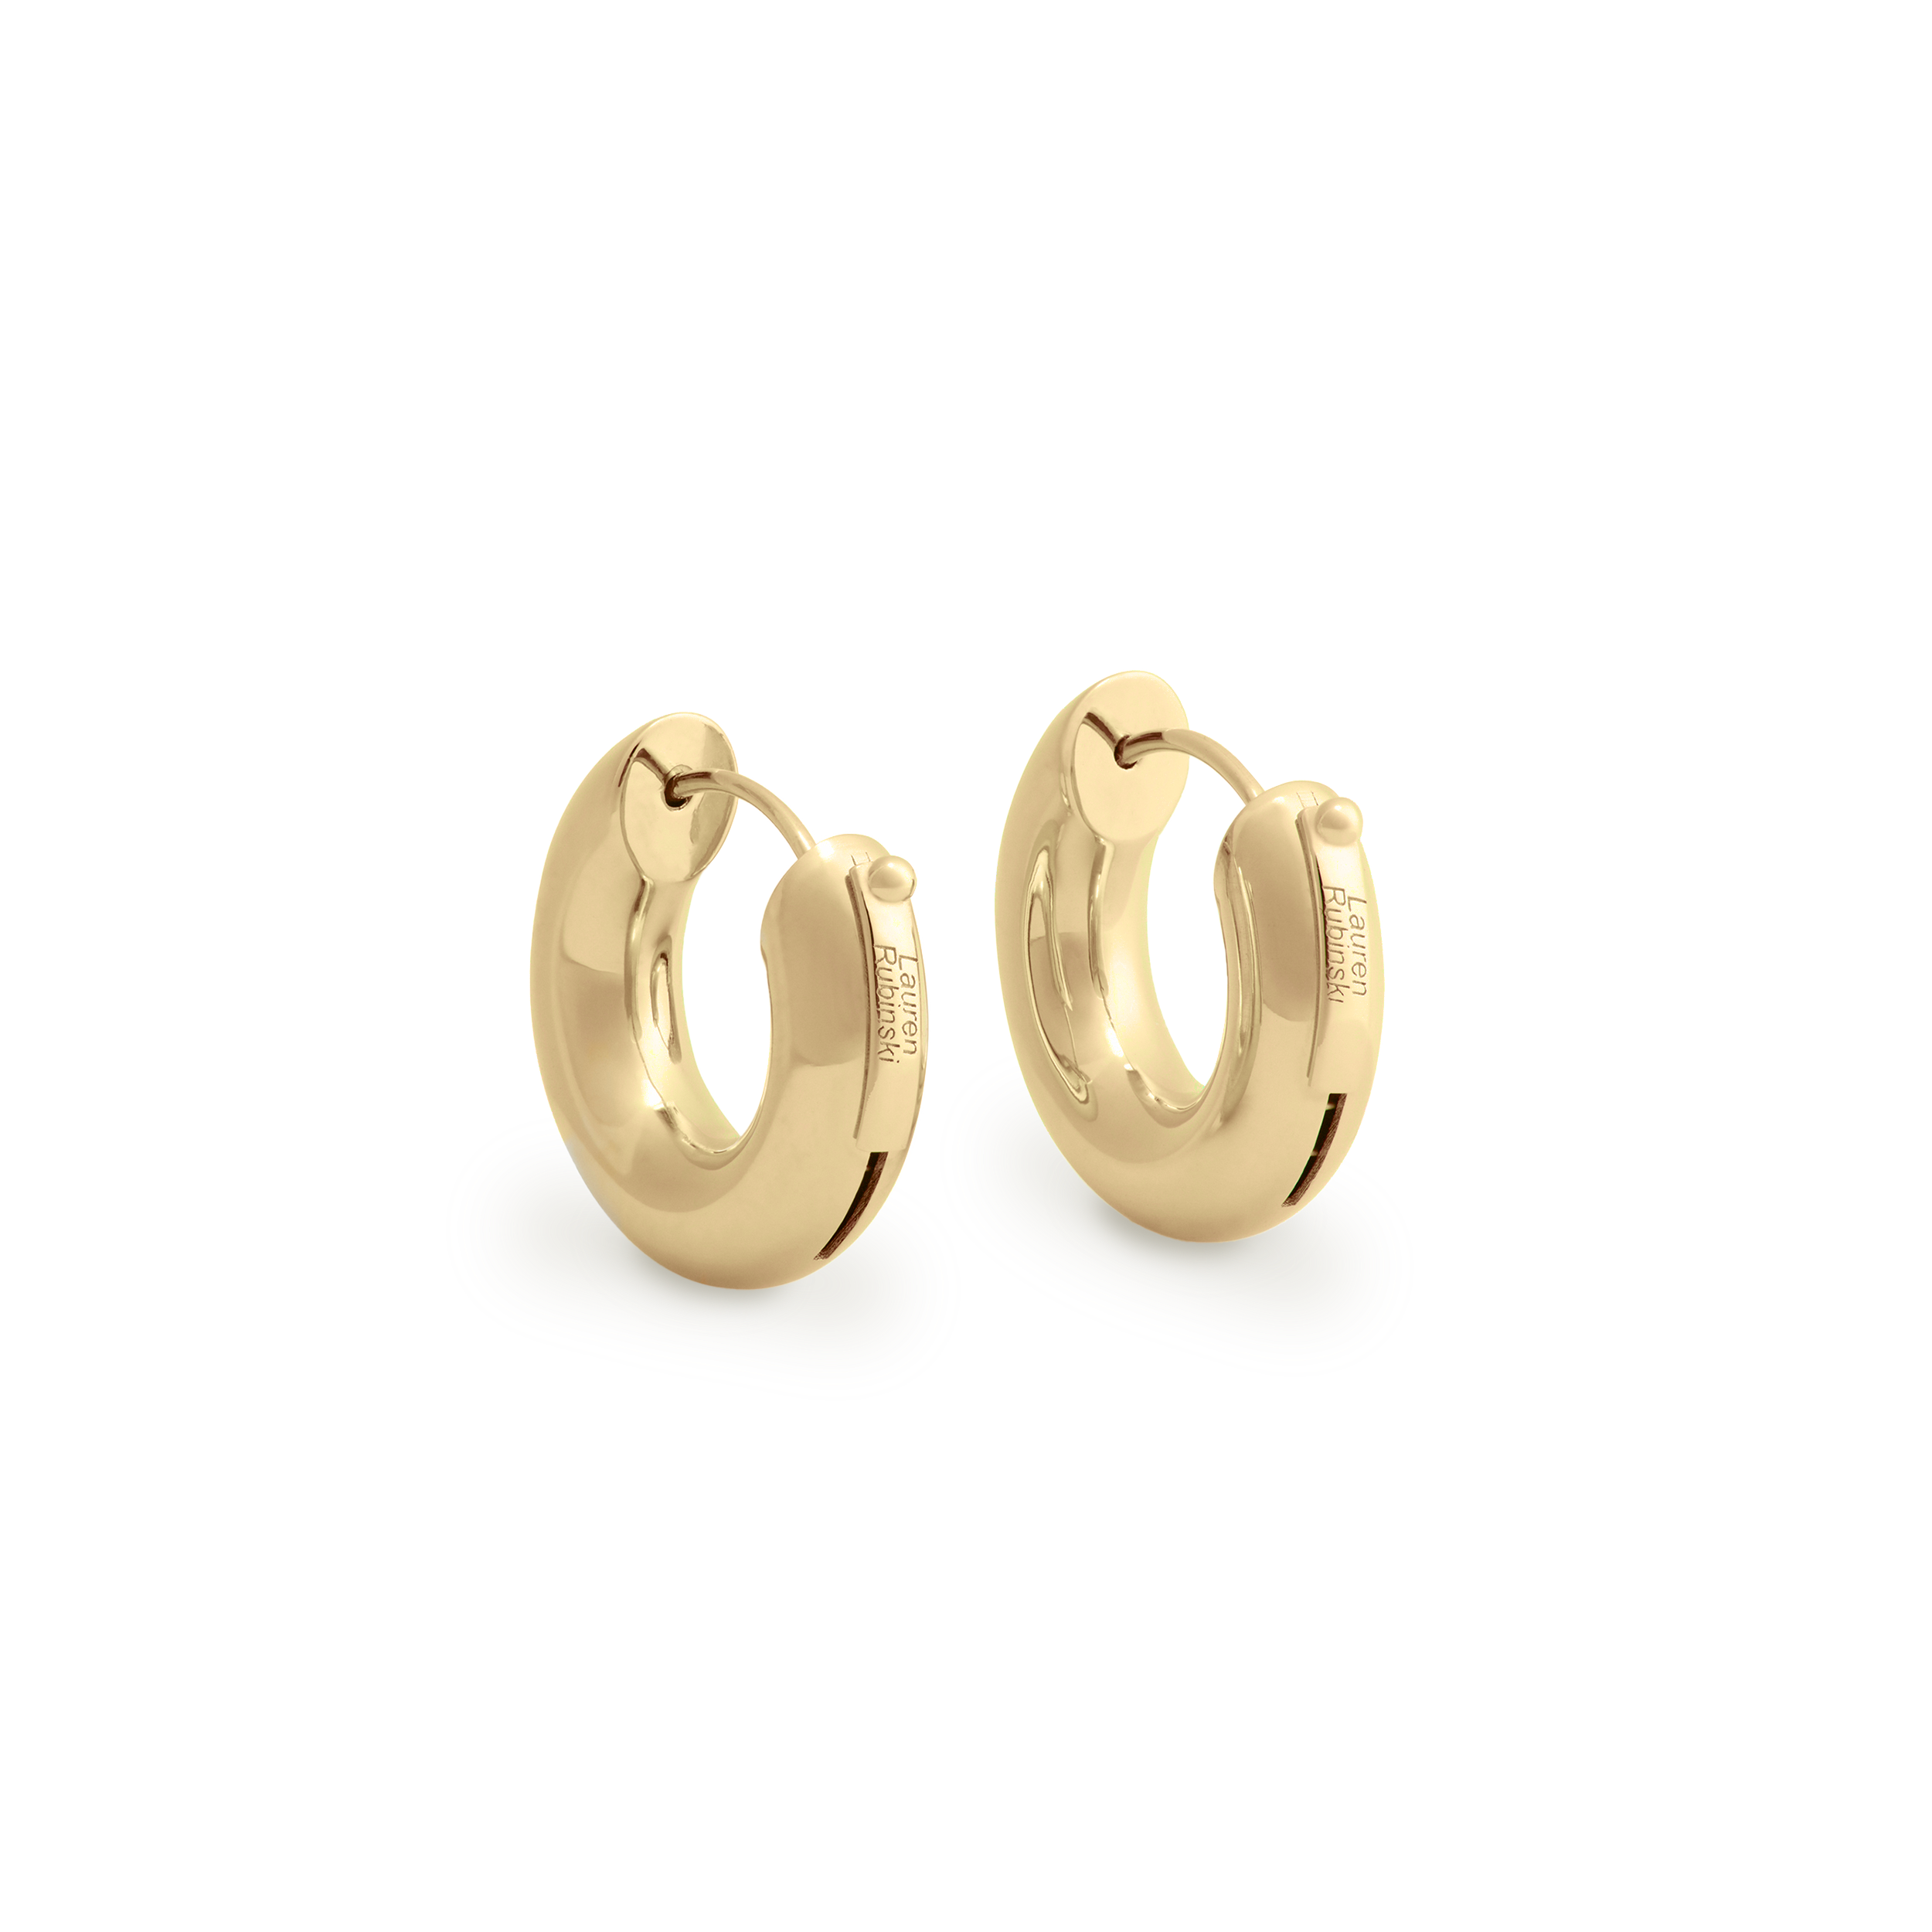 Tom Yellow Gold Donut Earrings